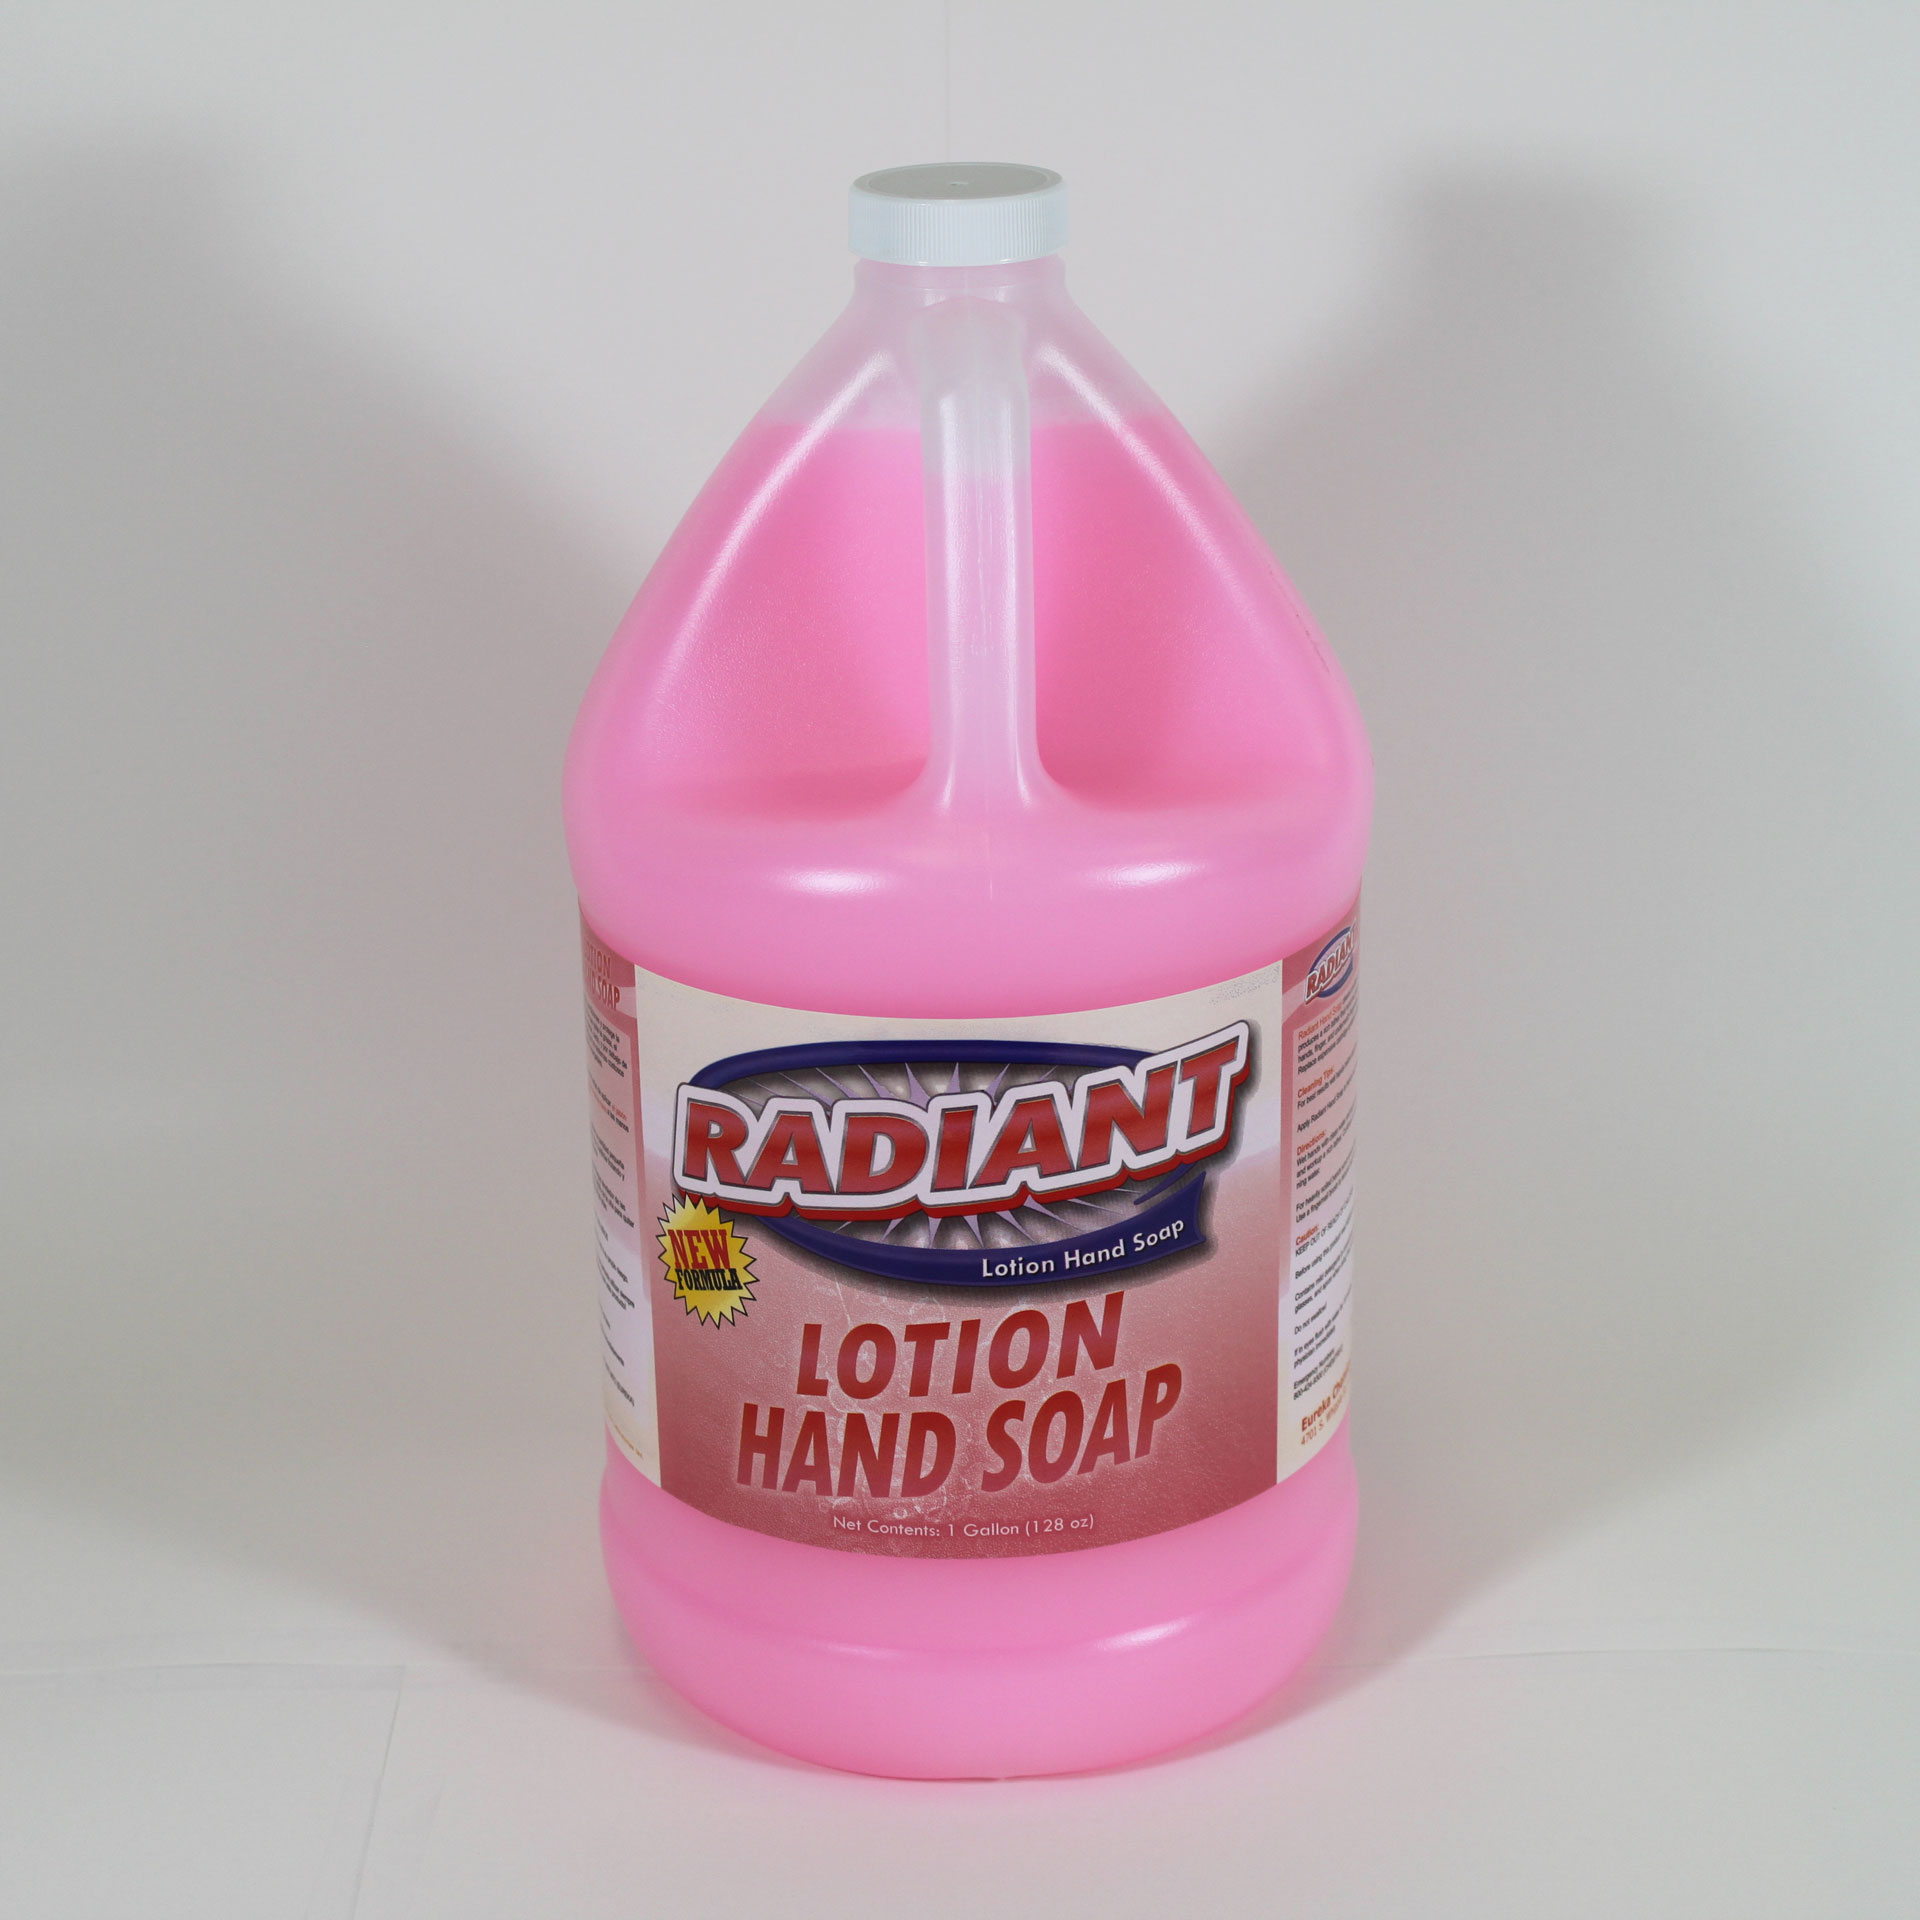 Bottle of Radiant hand soap.